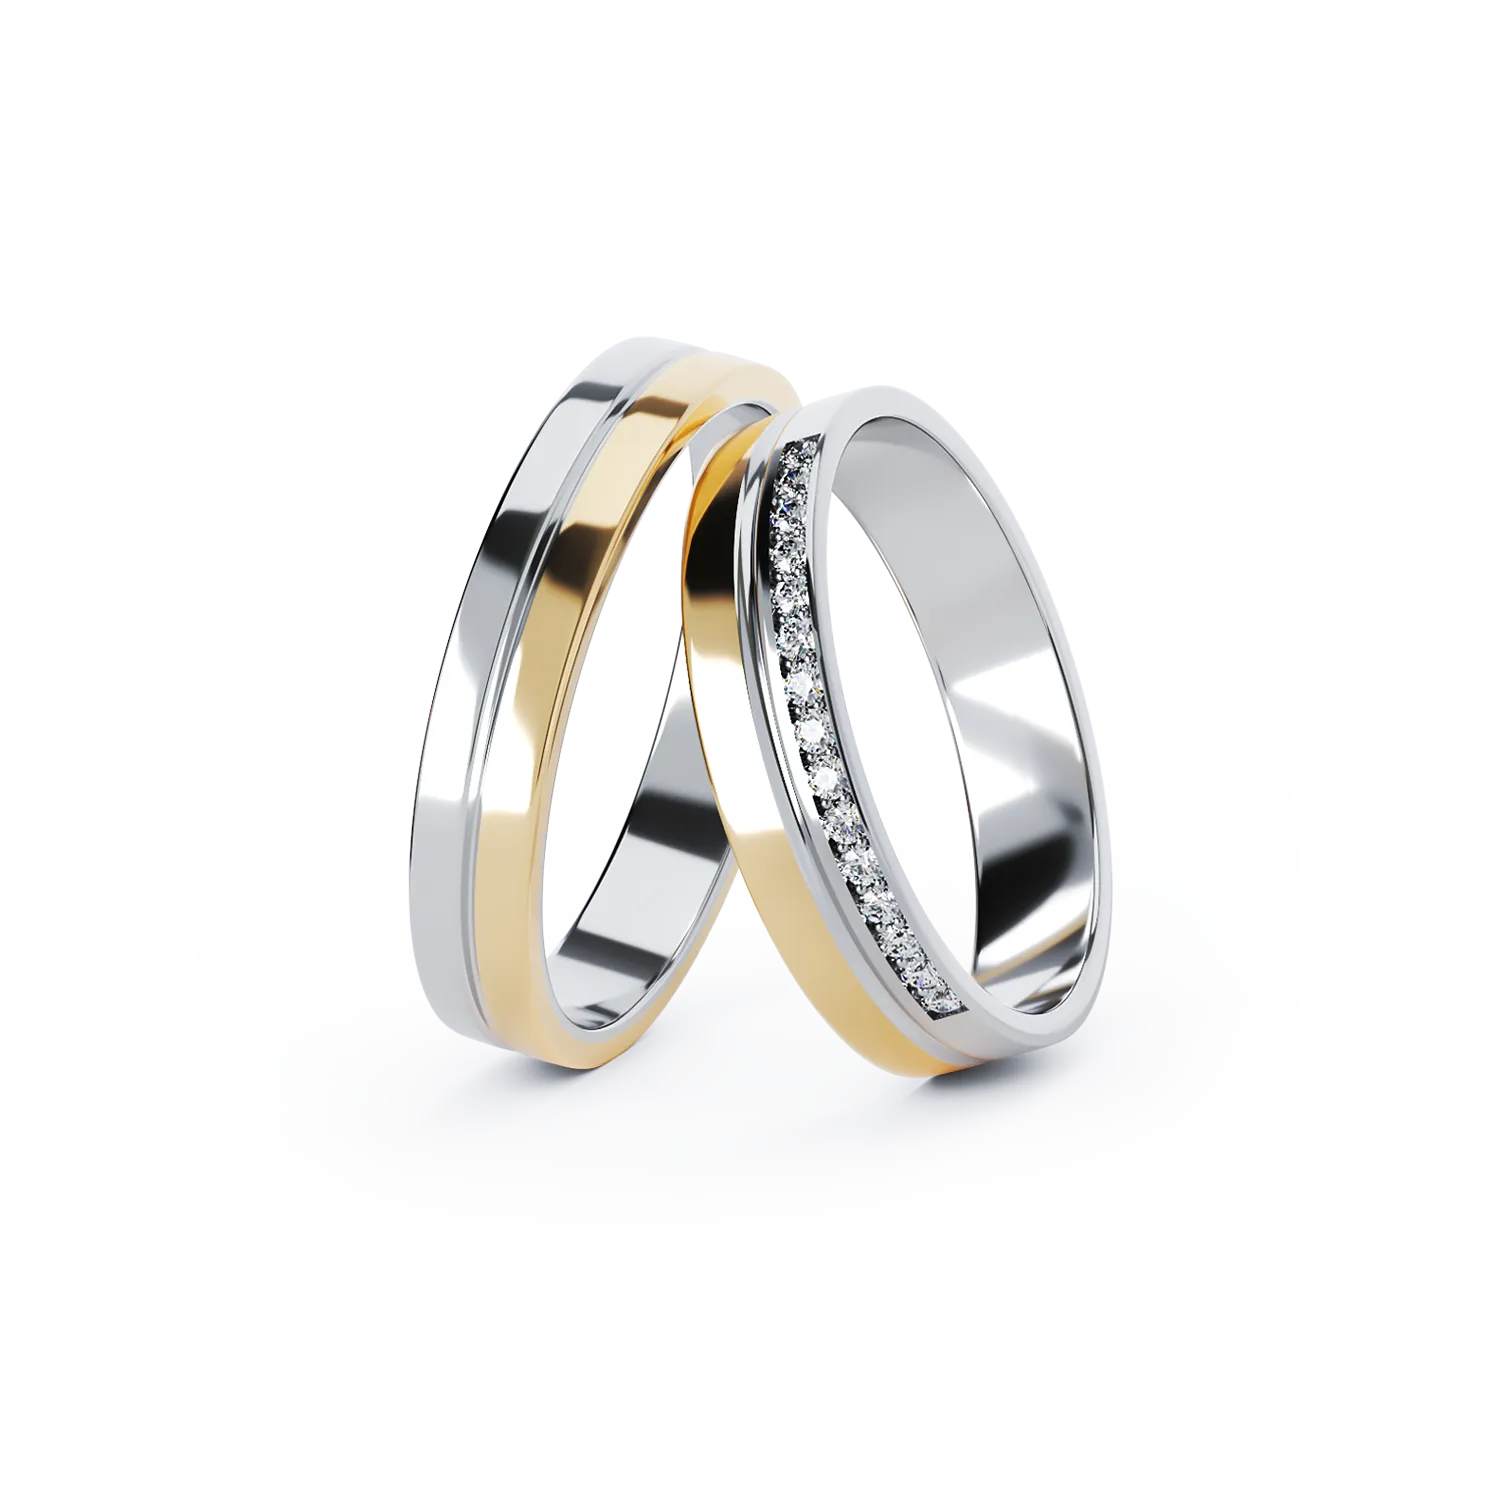 TEI-COEUR arany jegygyűrű